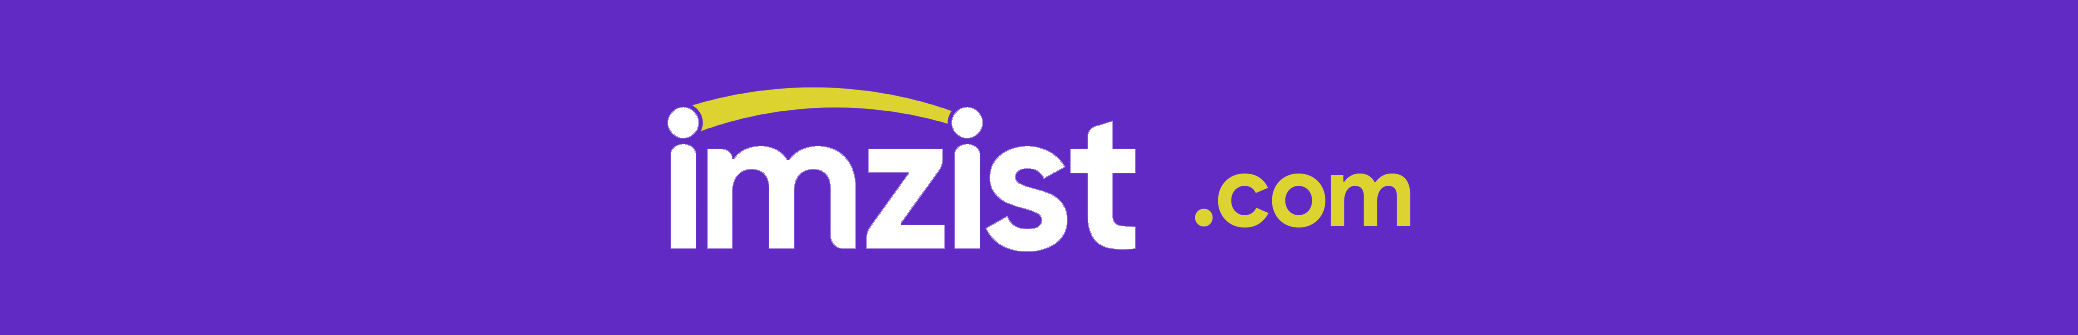 www.imzist.com